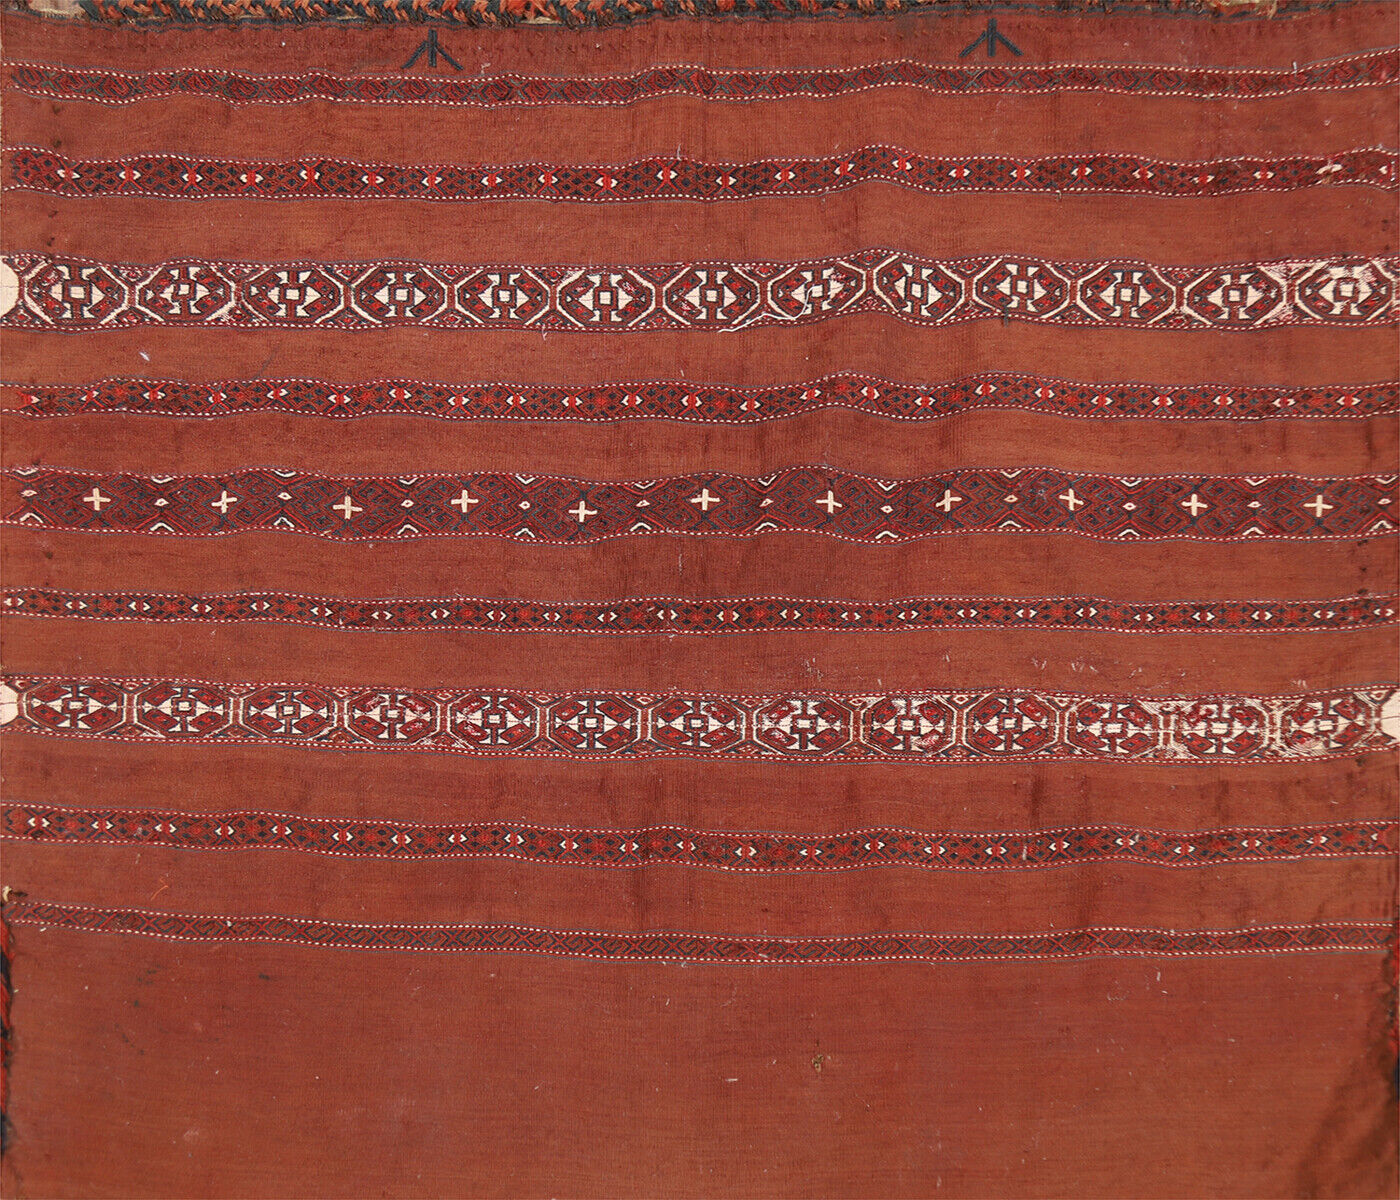 Geometric Pre-1900 Antique Saddle Bag Rug 3x4 Wool Hand-knotted Tribal Rug